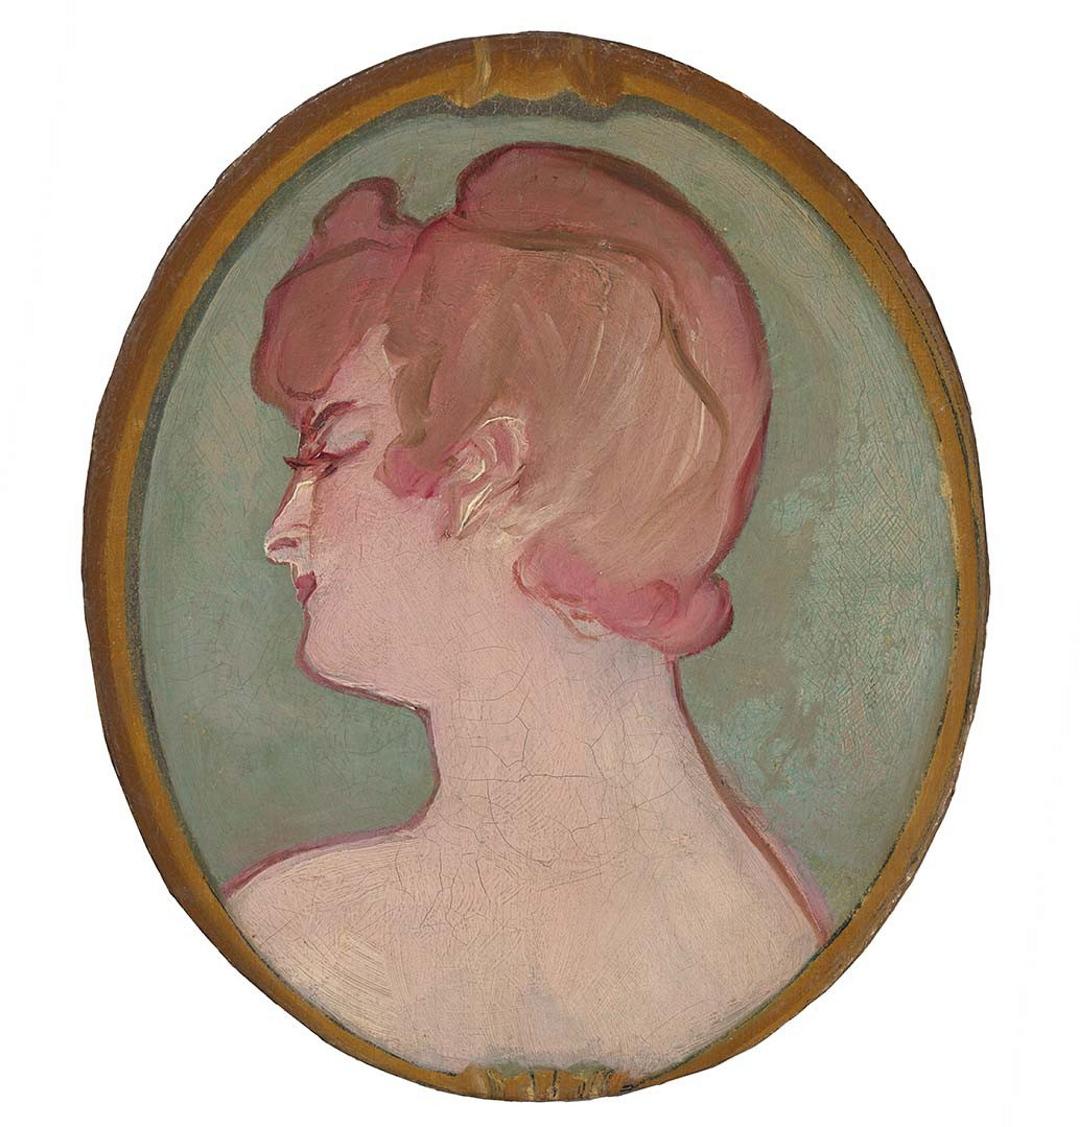 Slider: Raking light, Tete de fille (Head of a girl) 1892 